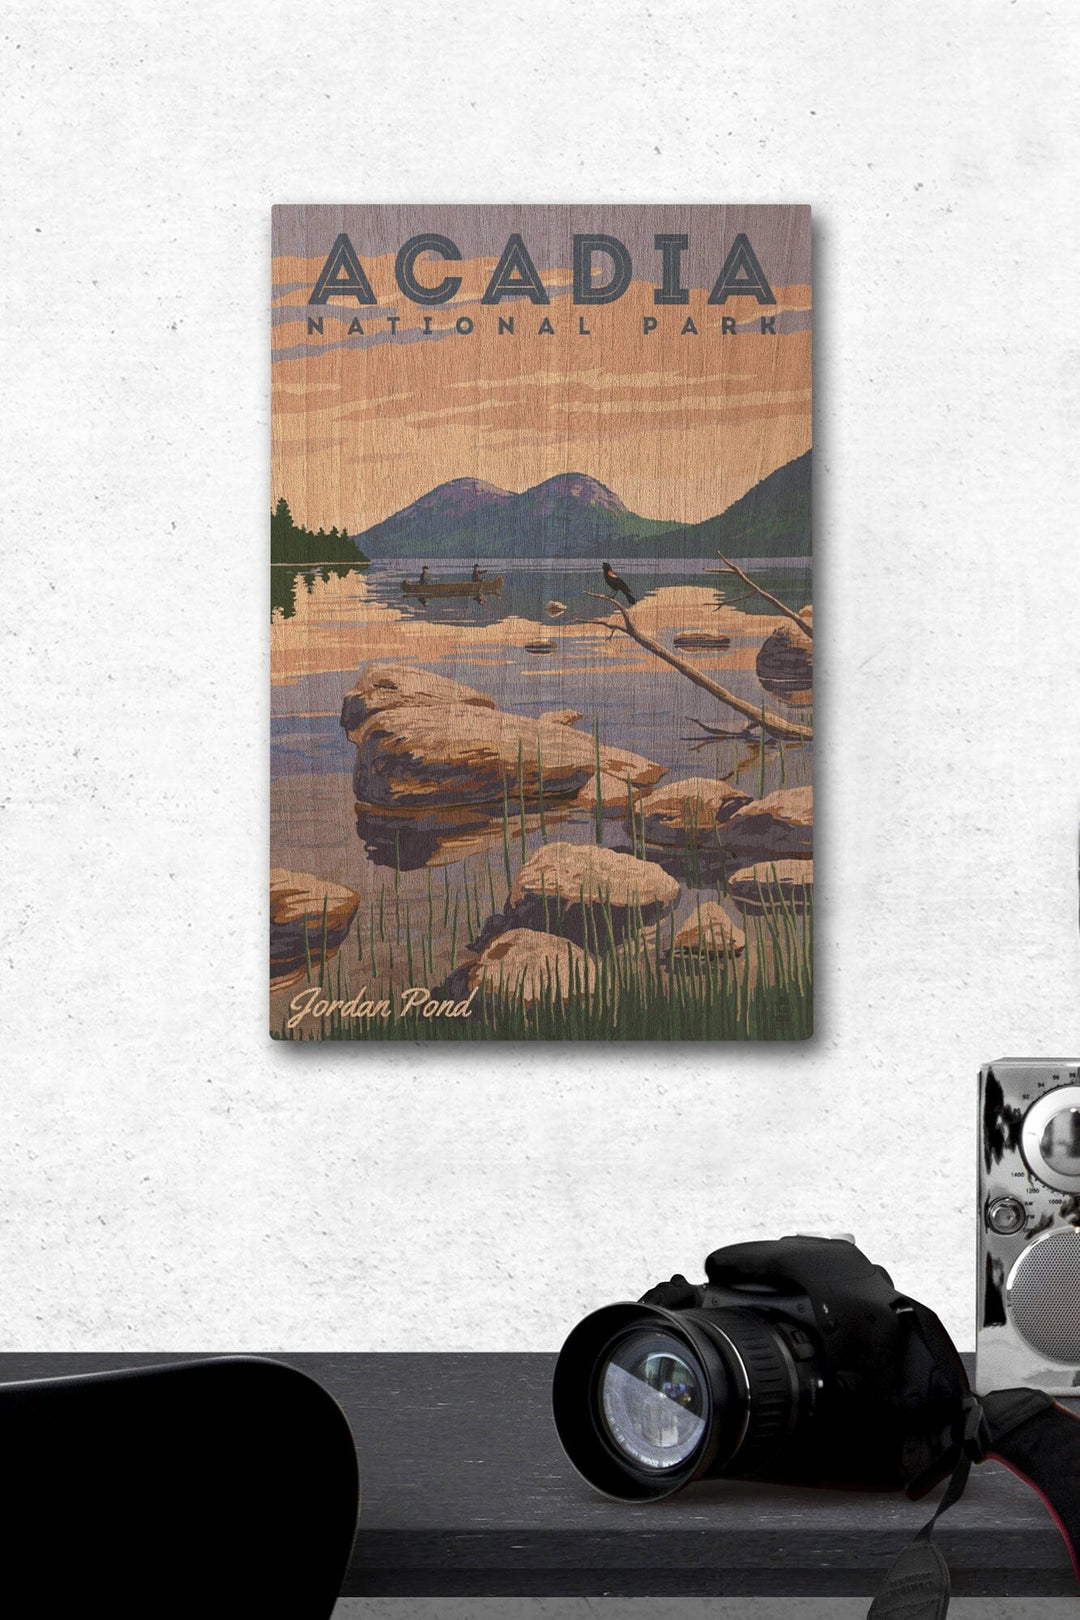 Acadia National Park, Maine, Jordan Pond Illustration, Lantern Press Artwork, Wood Signs and Postcards Wood Lantern Press 12 x 18 Wood Gallery Print 